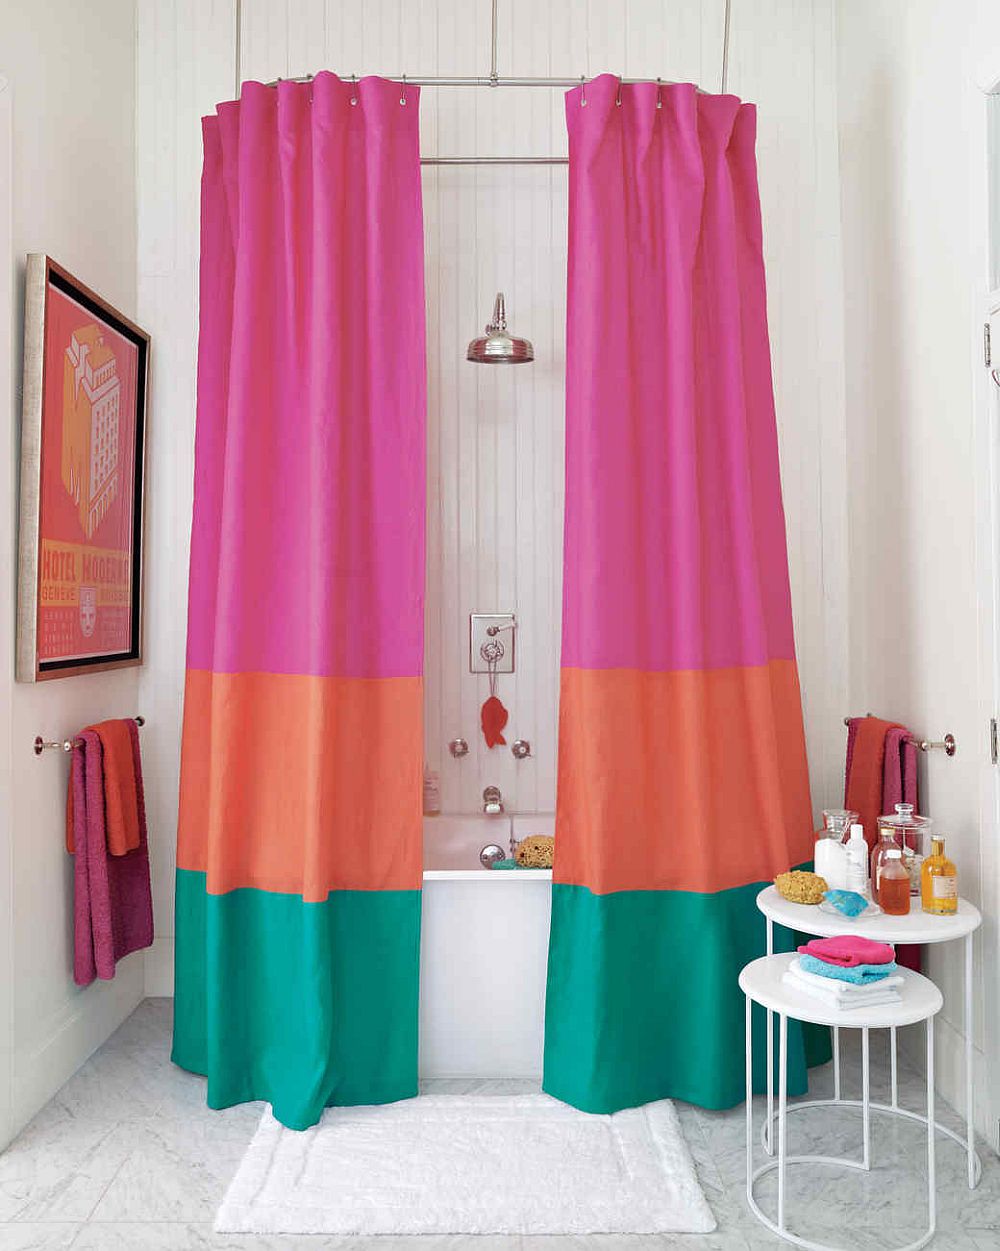 Creative Diy Shower Curtains, Make My Own Shower Curtain